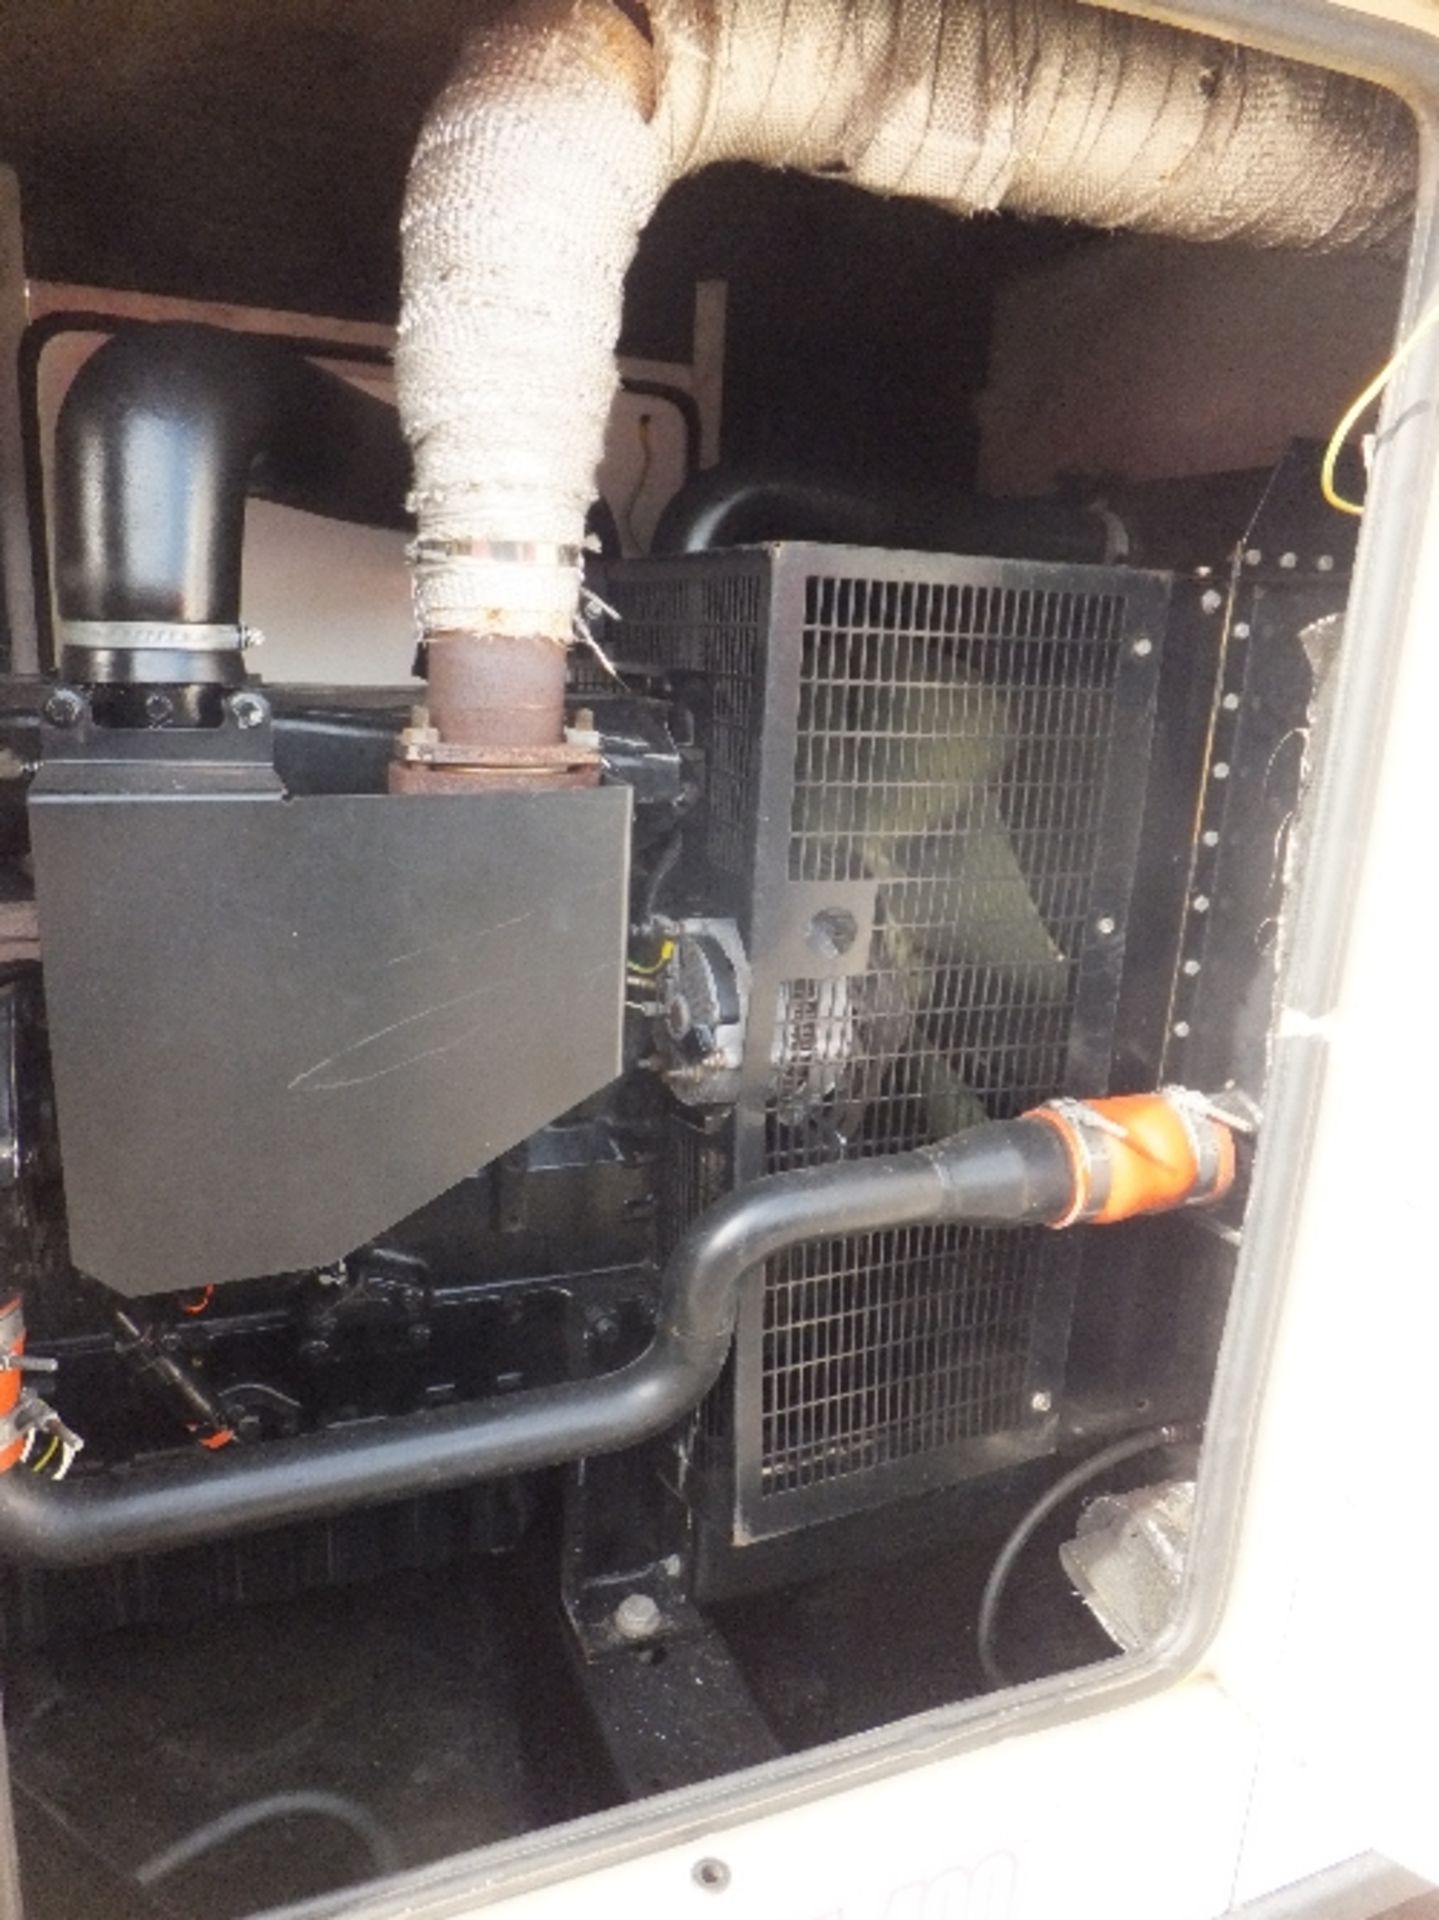 Wilson Perkins 135kva generator - wiring fault
HF2911 - Image 3 of 5